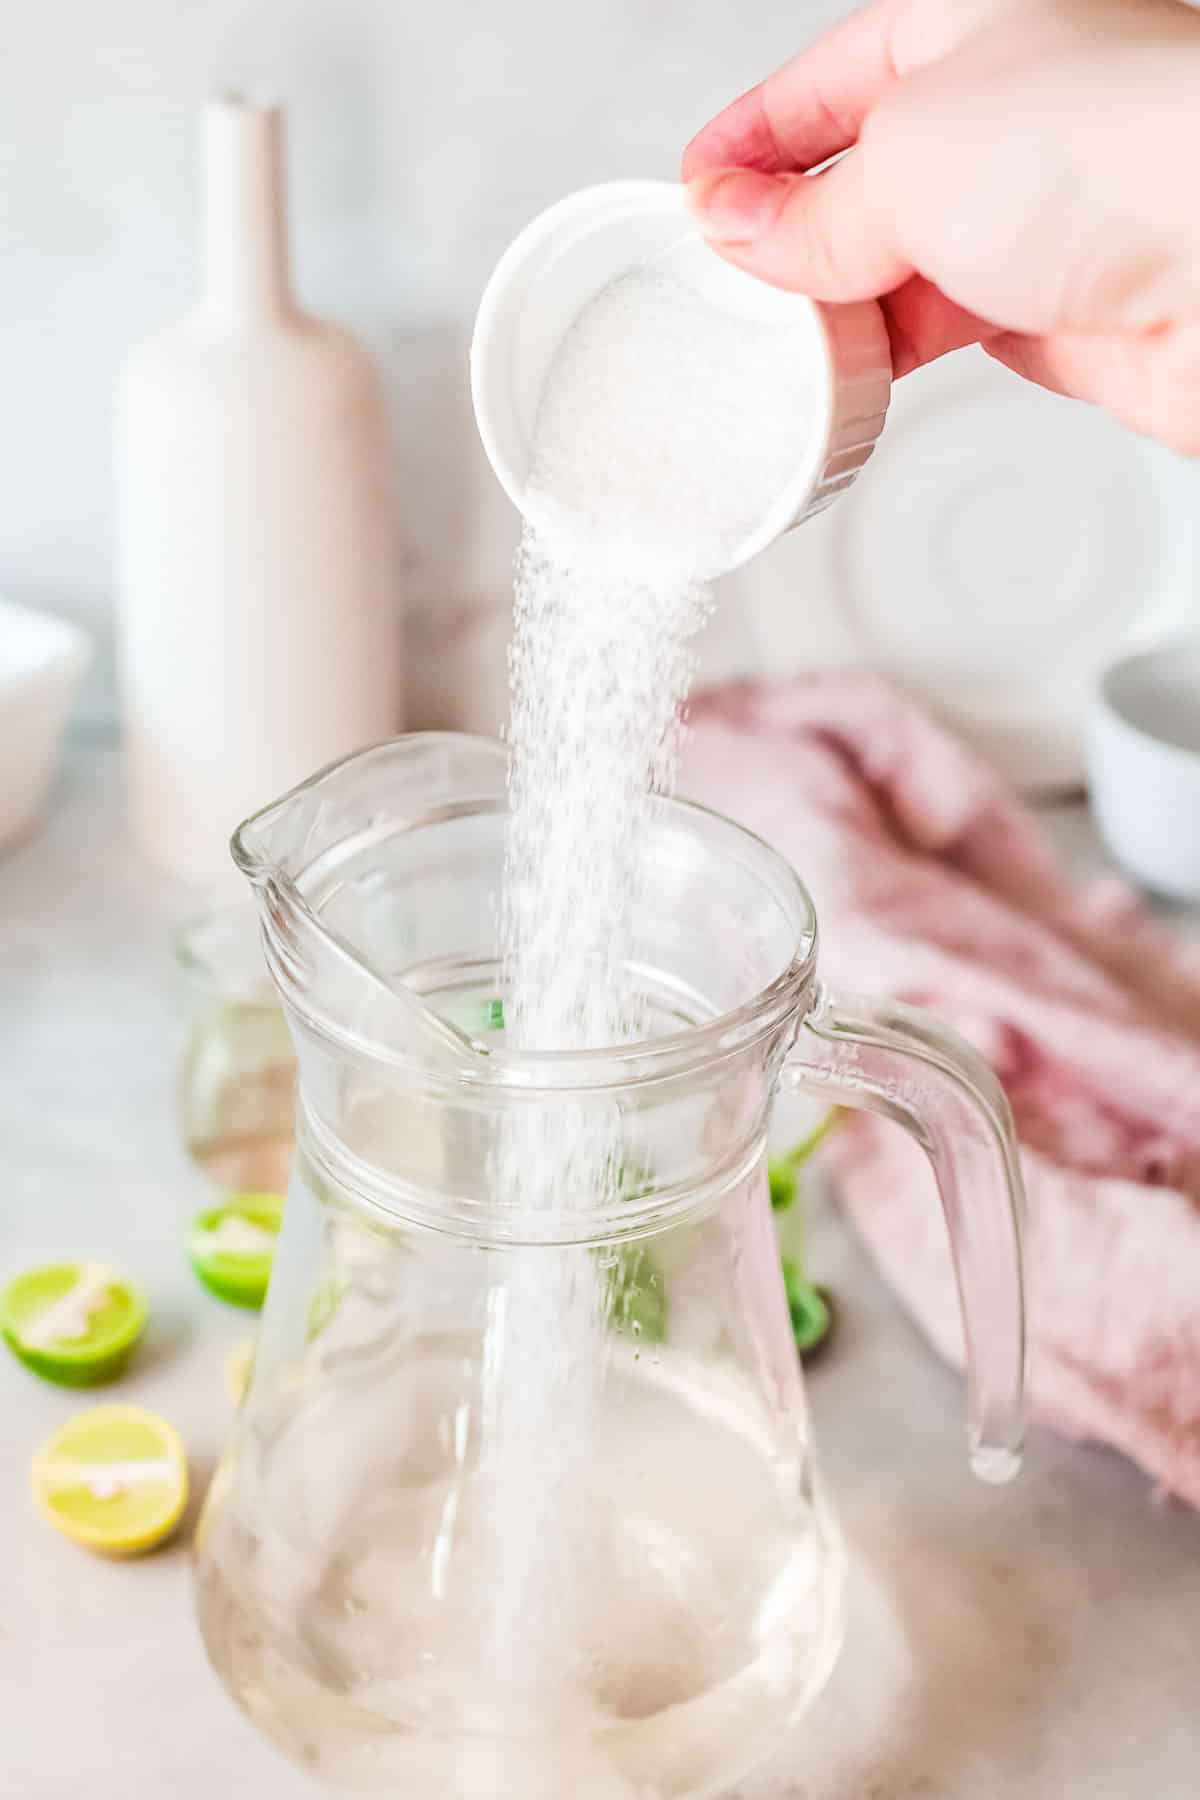 limeade recipe: adding sugar to water